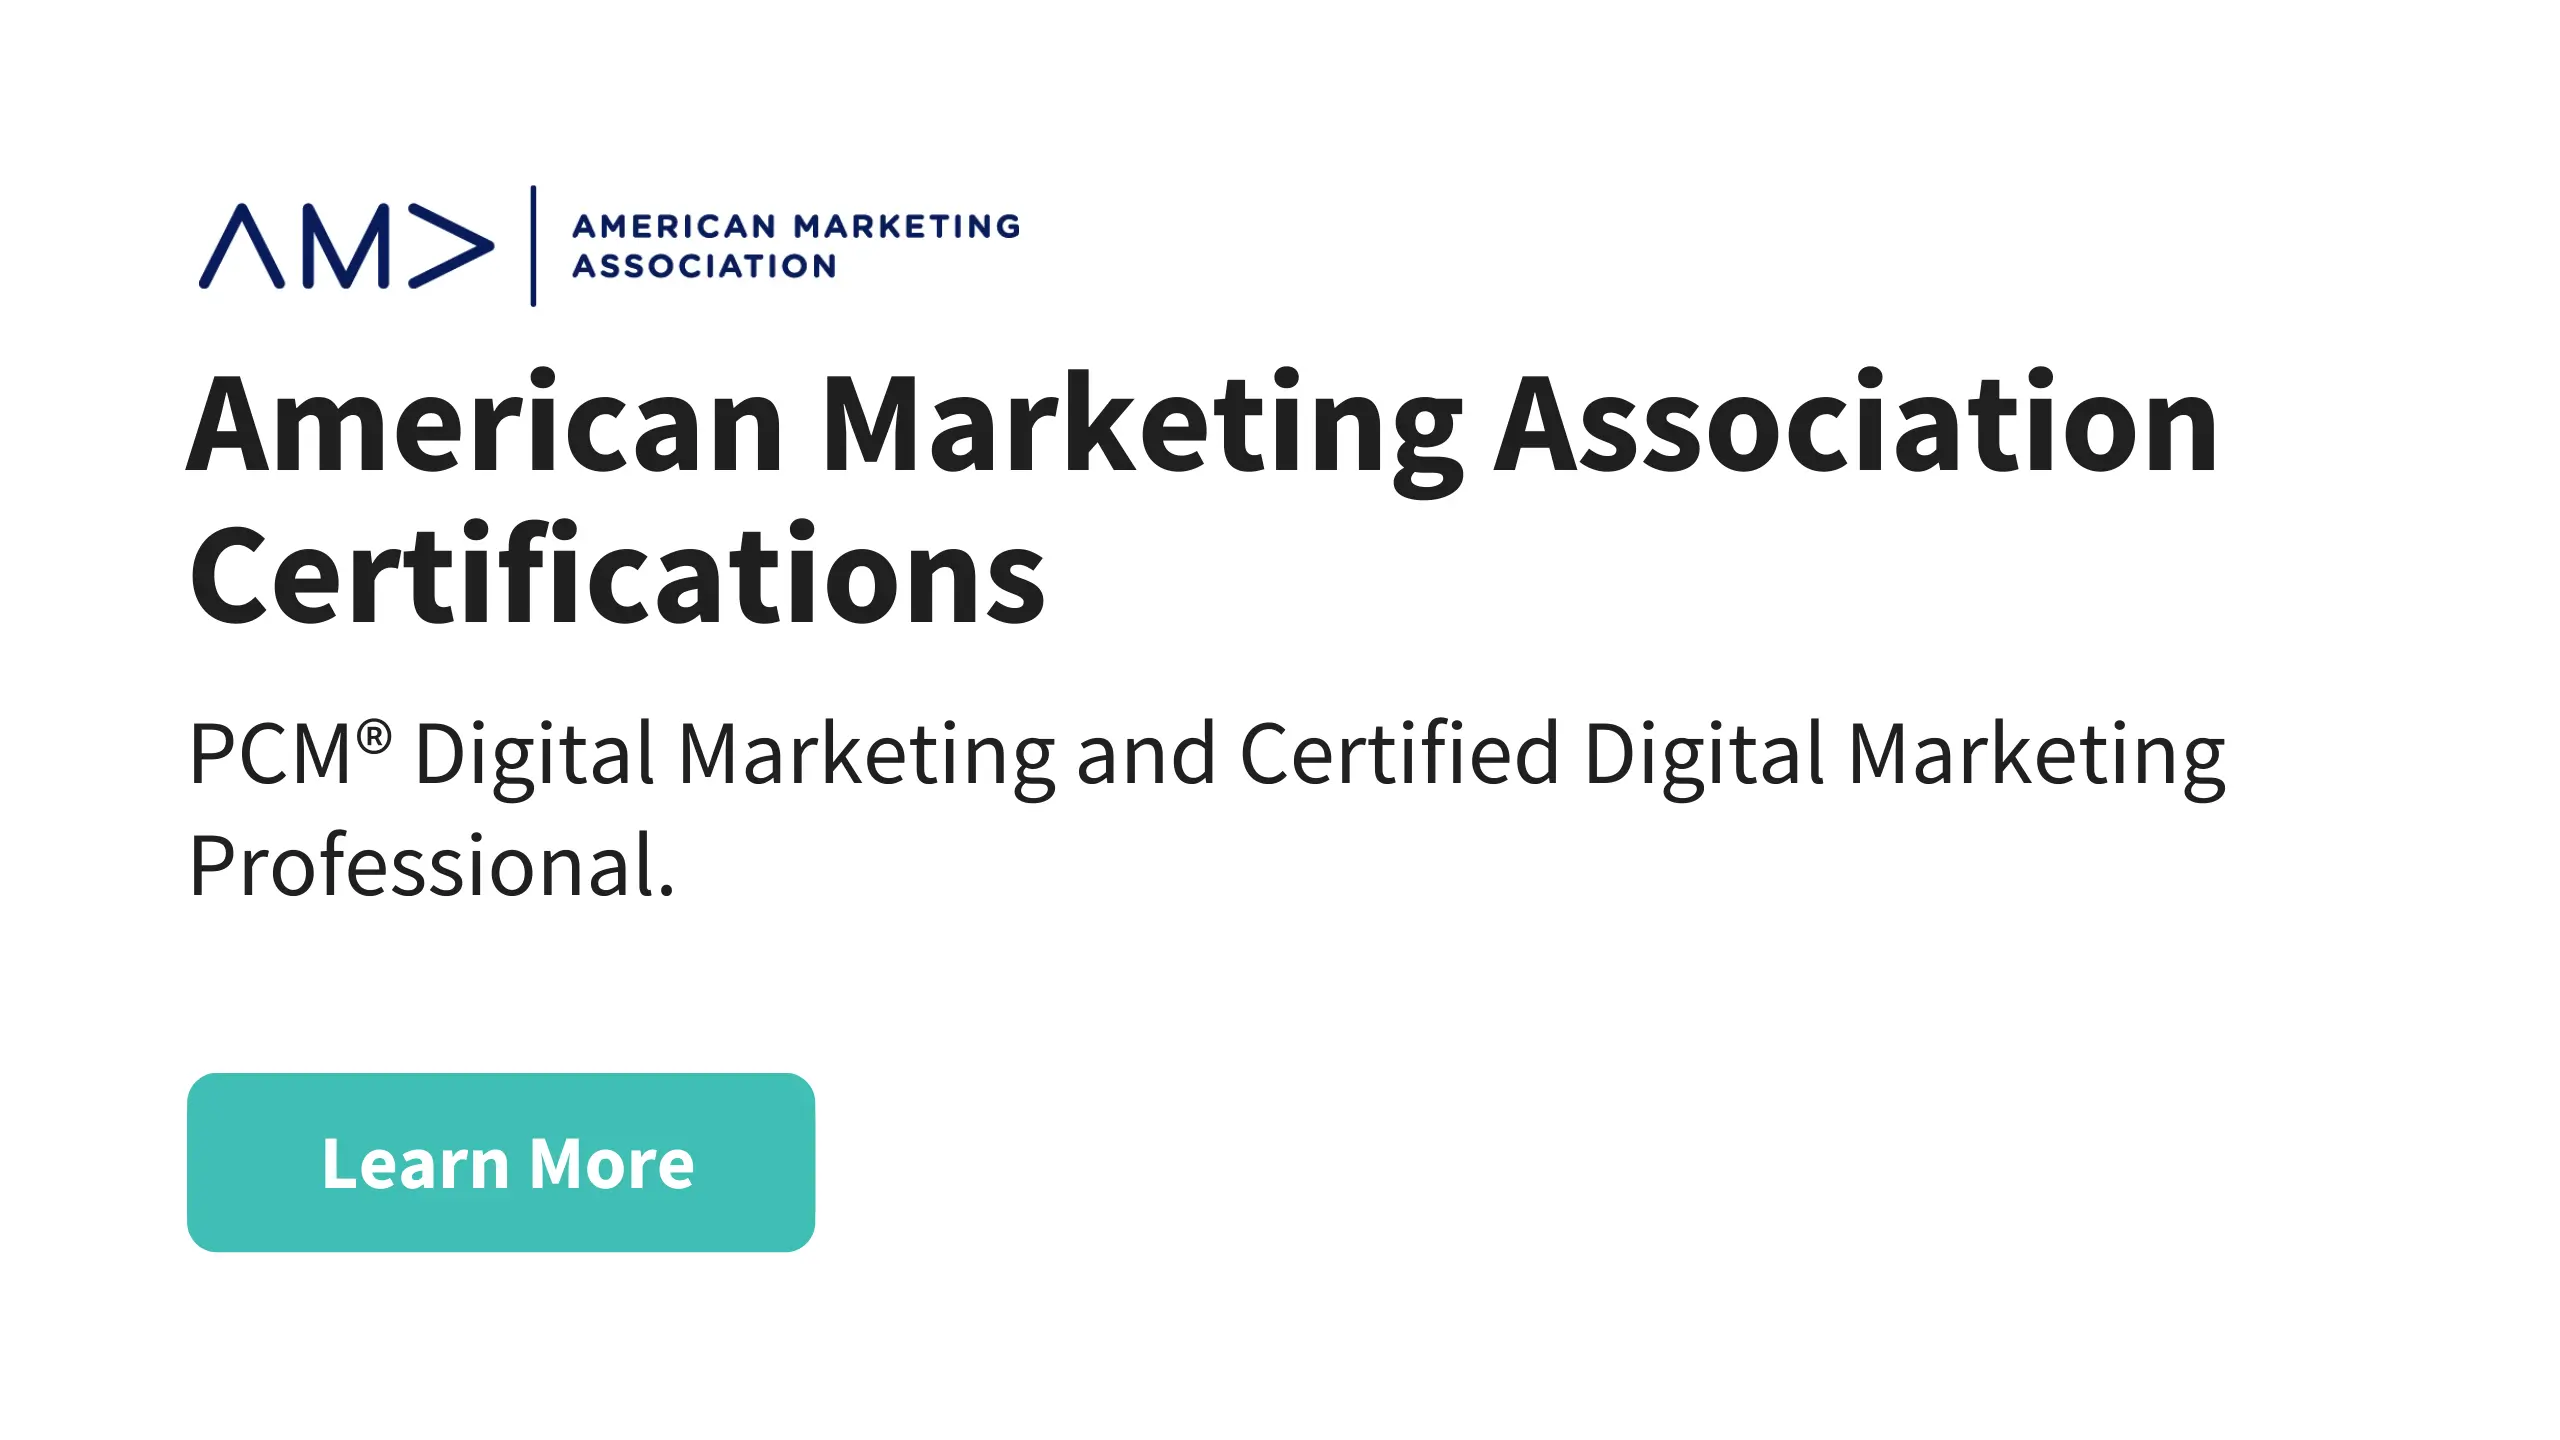 AMA - American Marketing Association Certification